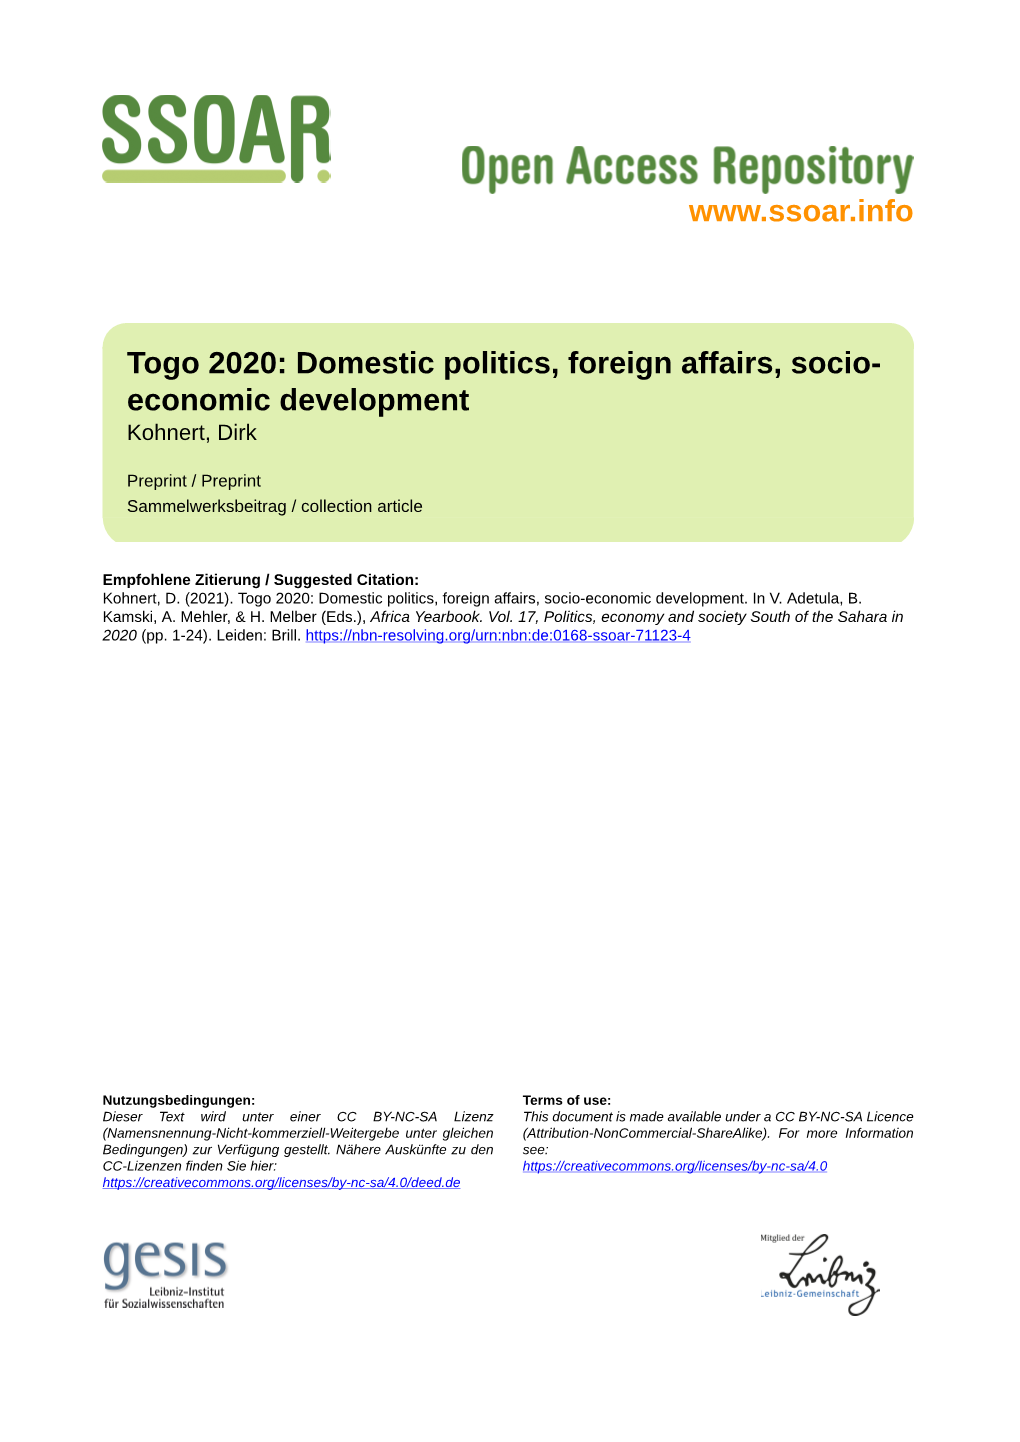 Togo 2020: Domestic Politics, Foreign Affairs, Socio- Economic Development Kohnert, Dirk